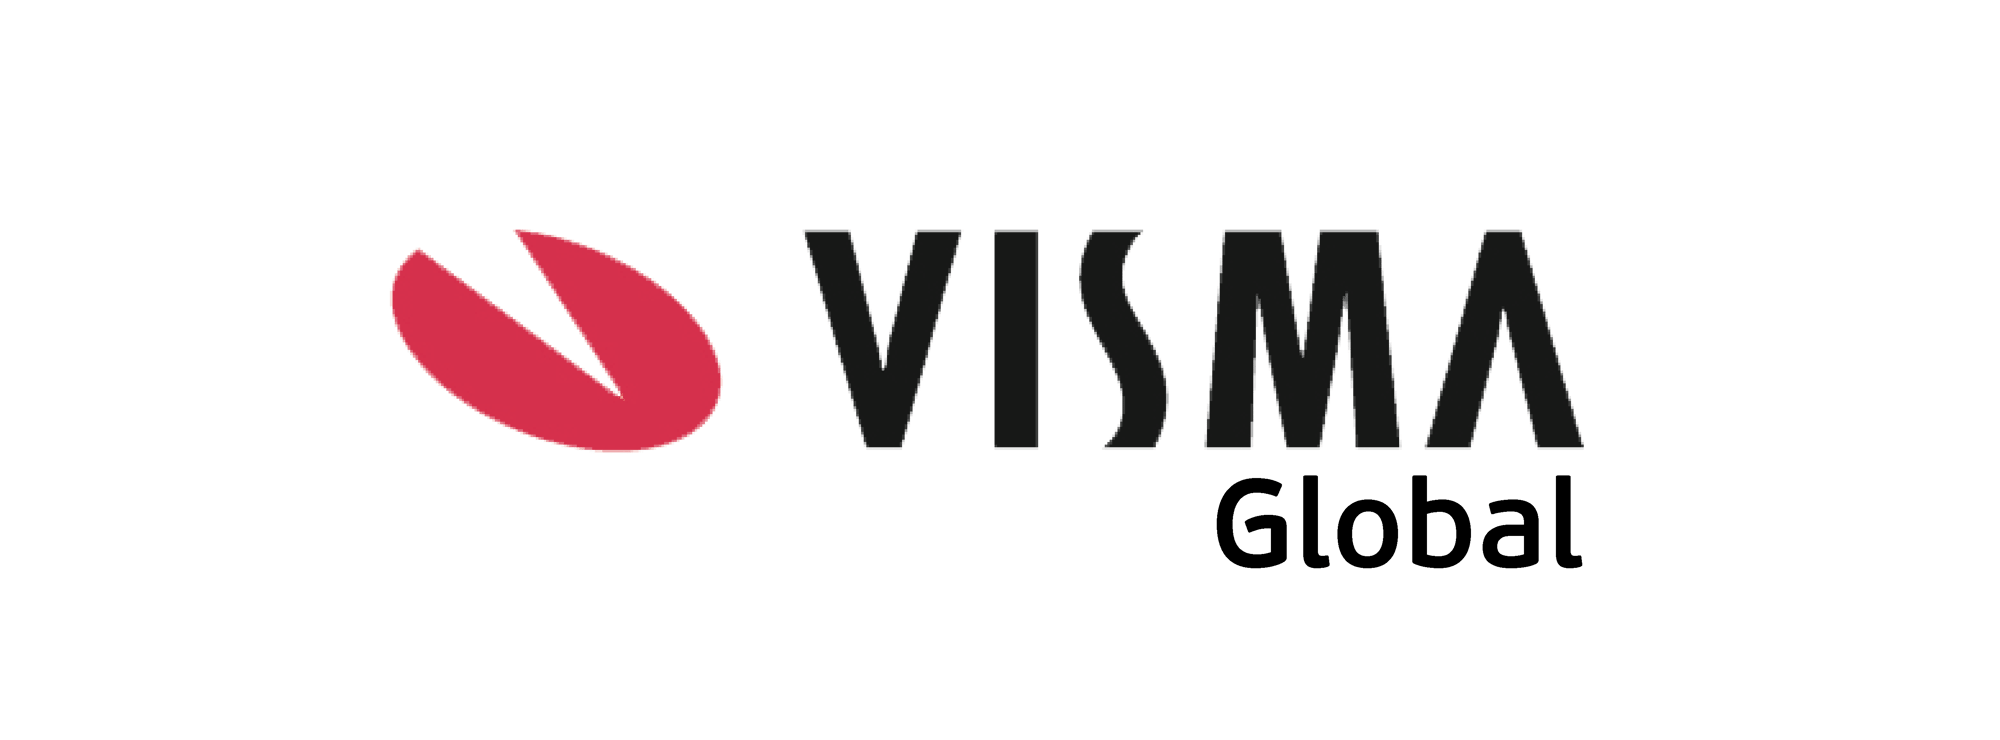 Visma-Global